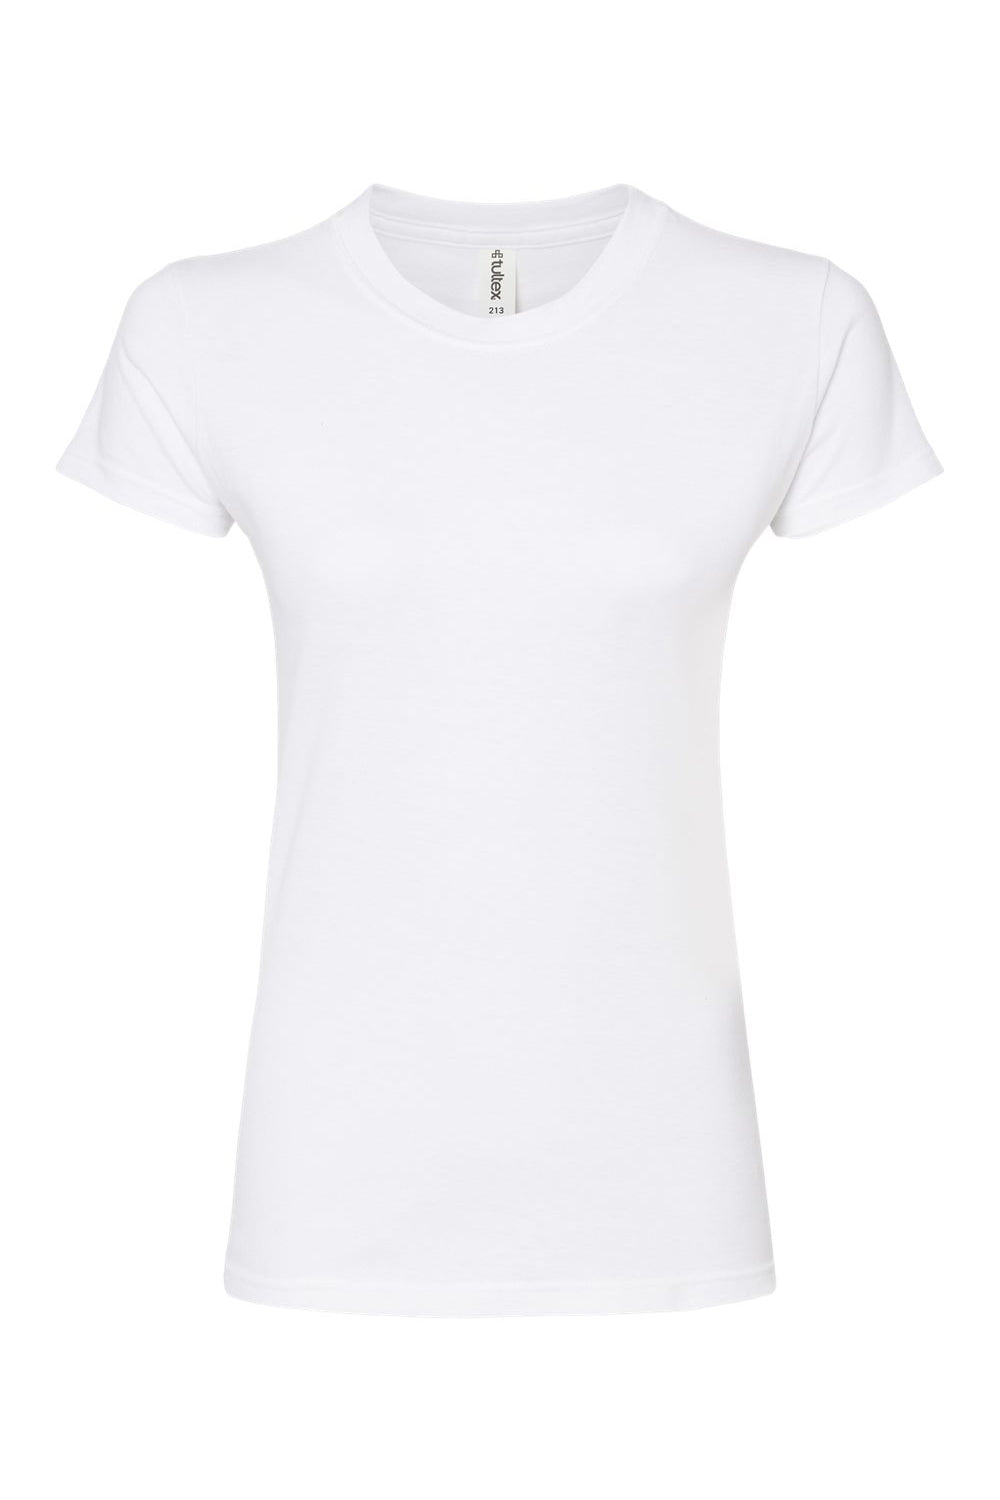 Tultex 213 Womens Fine Jersey Slim Fit Short Sleeve Crewneck T-Shirt White Flat Front